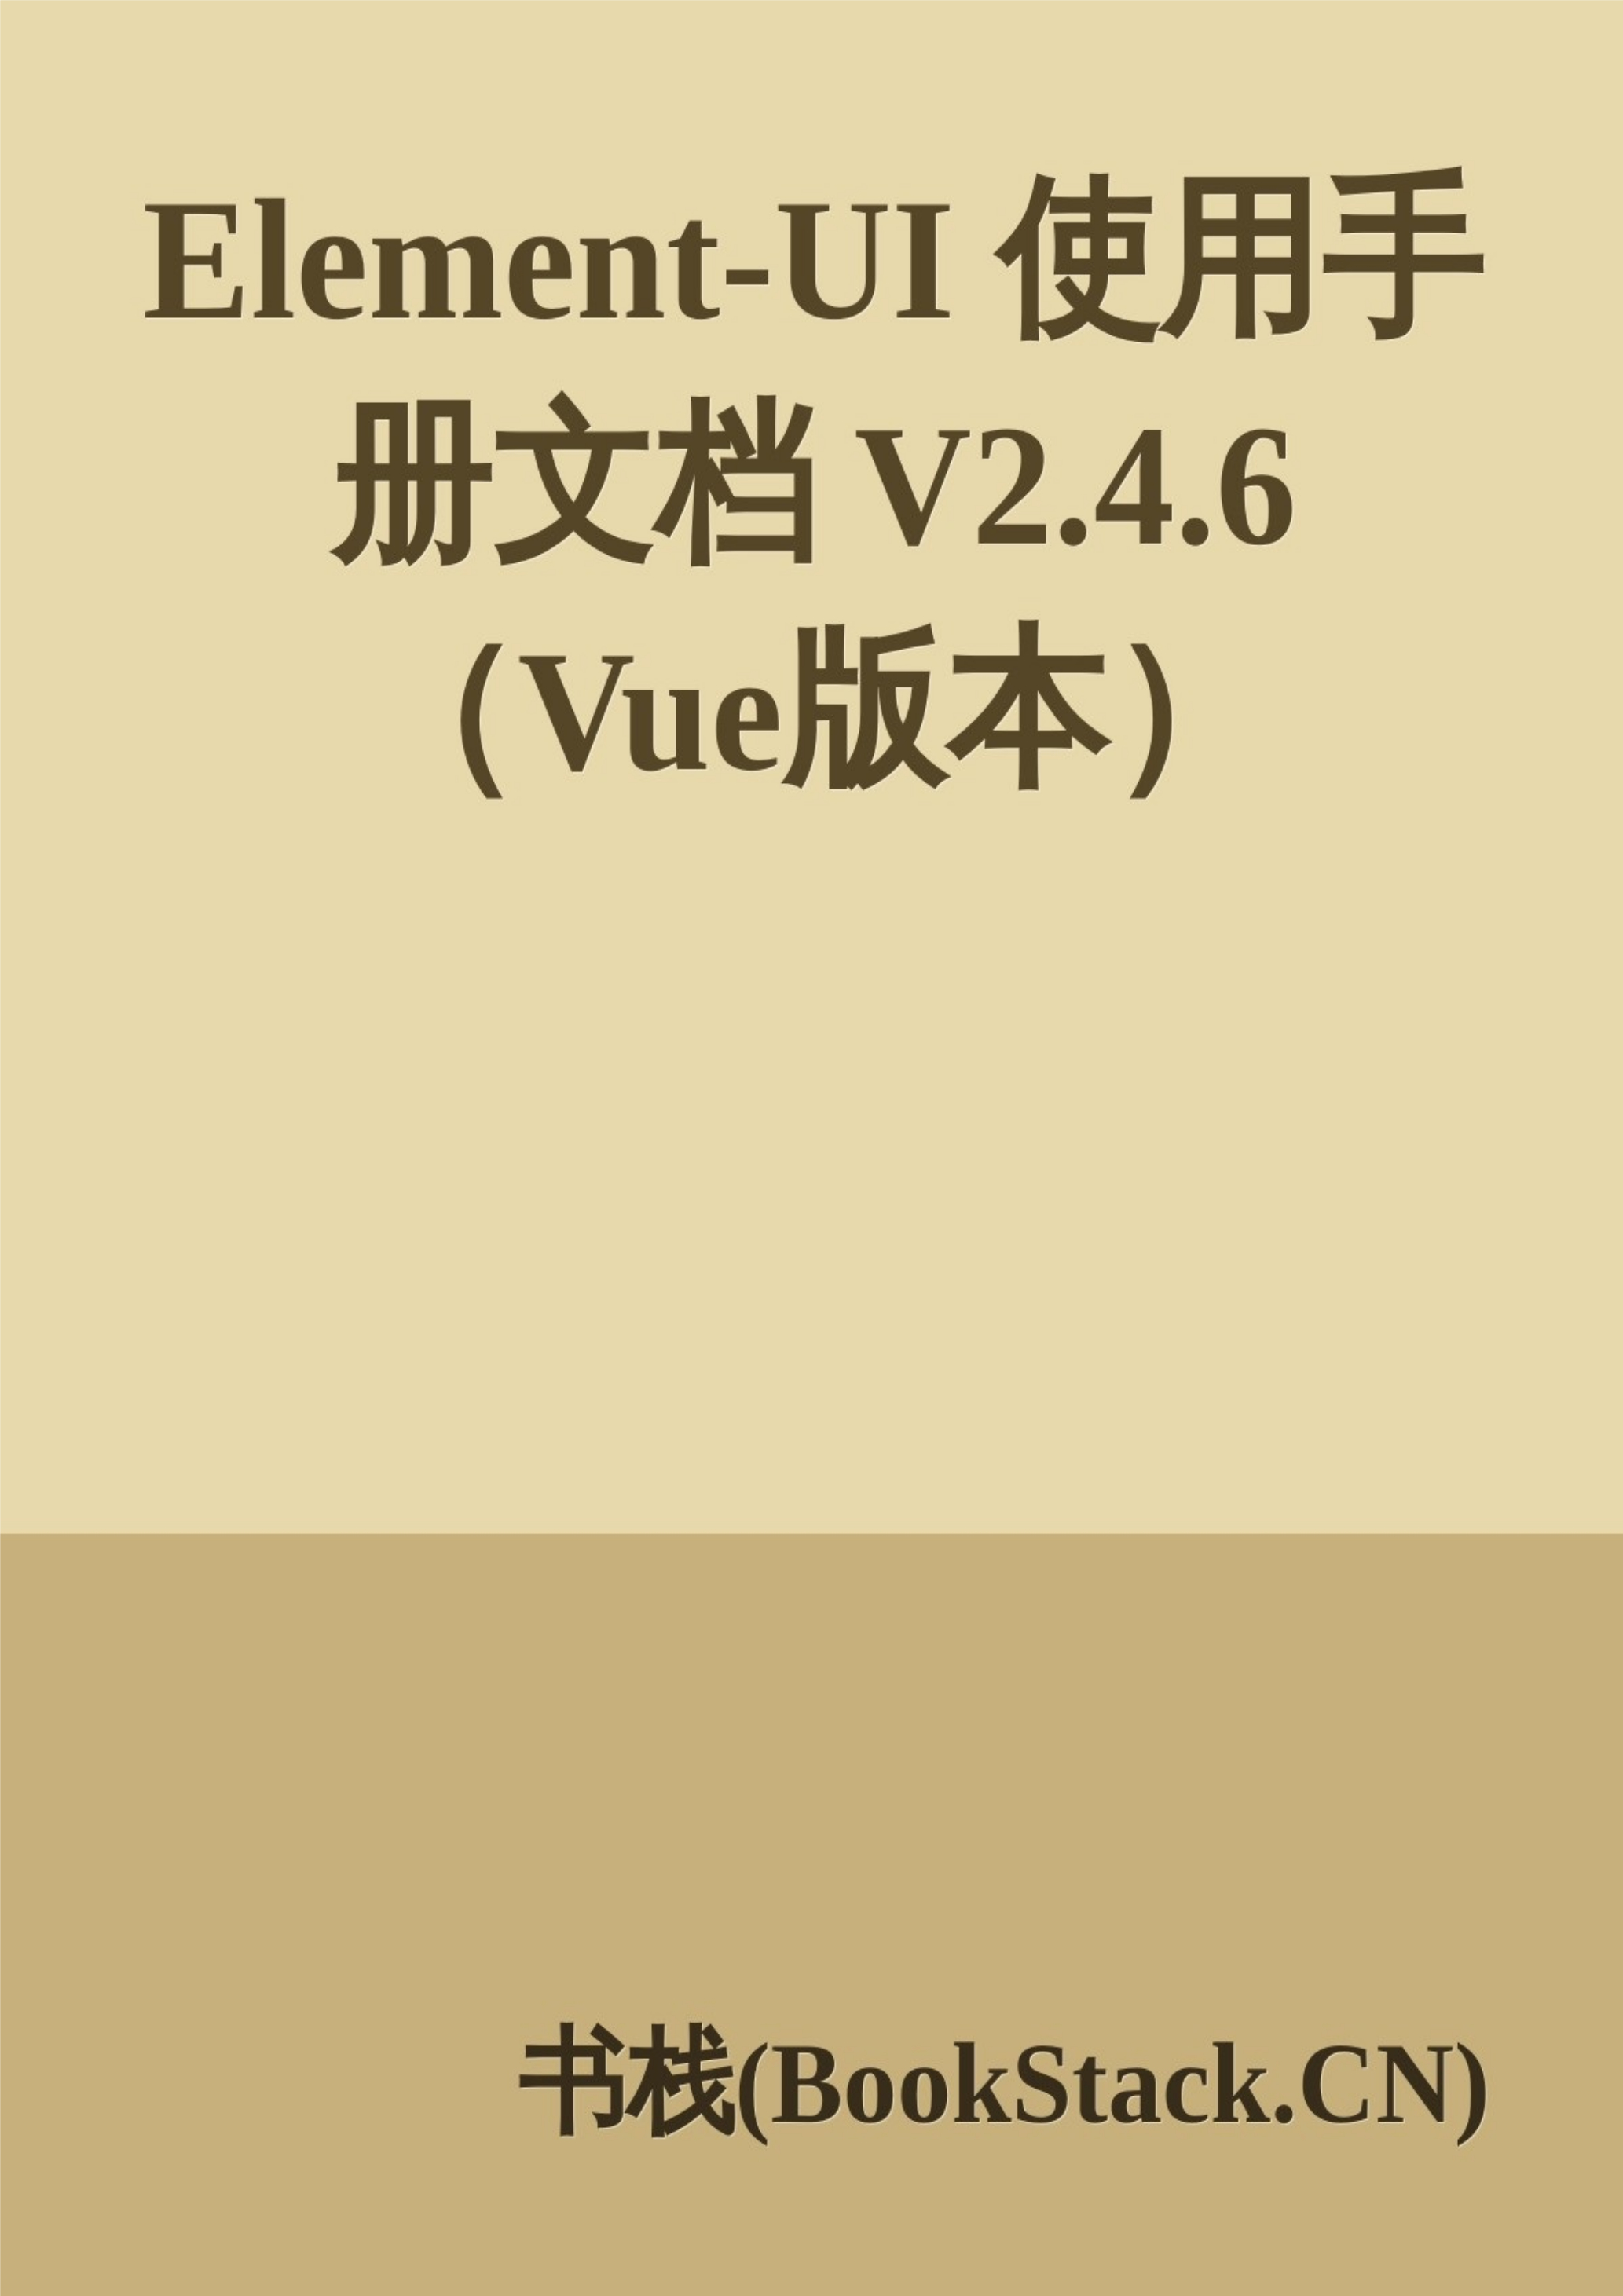 Element-UI 使用手册文档 V2.4.6 （Vue版本） 封面